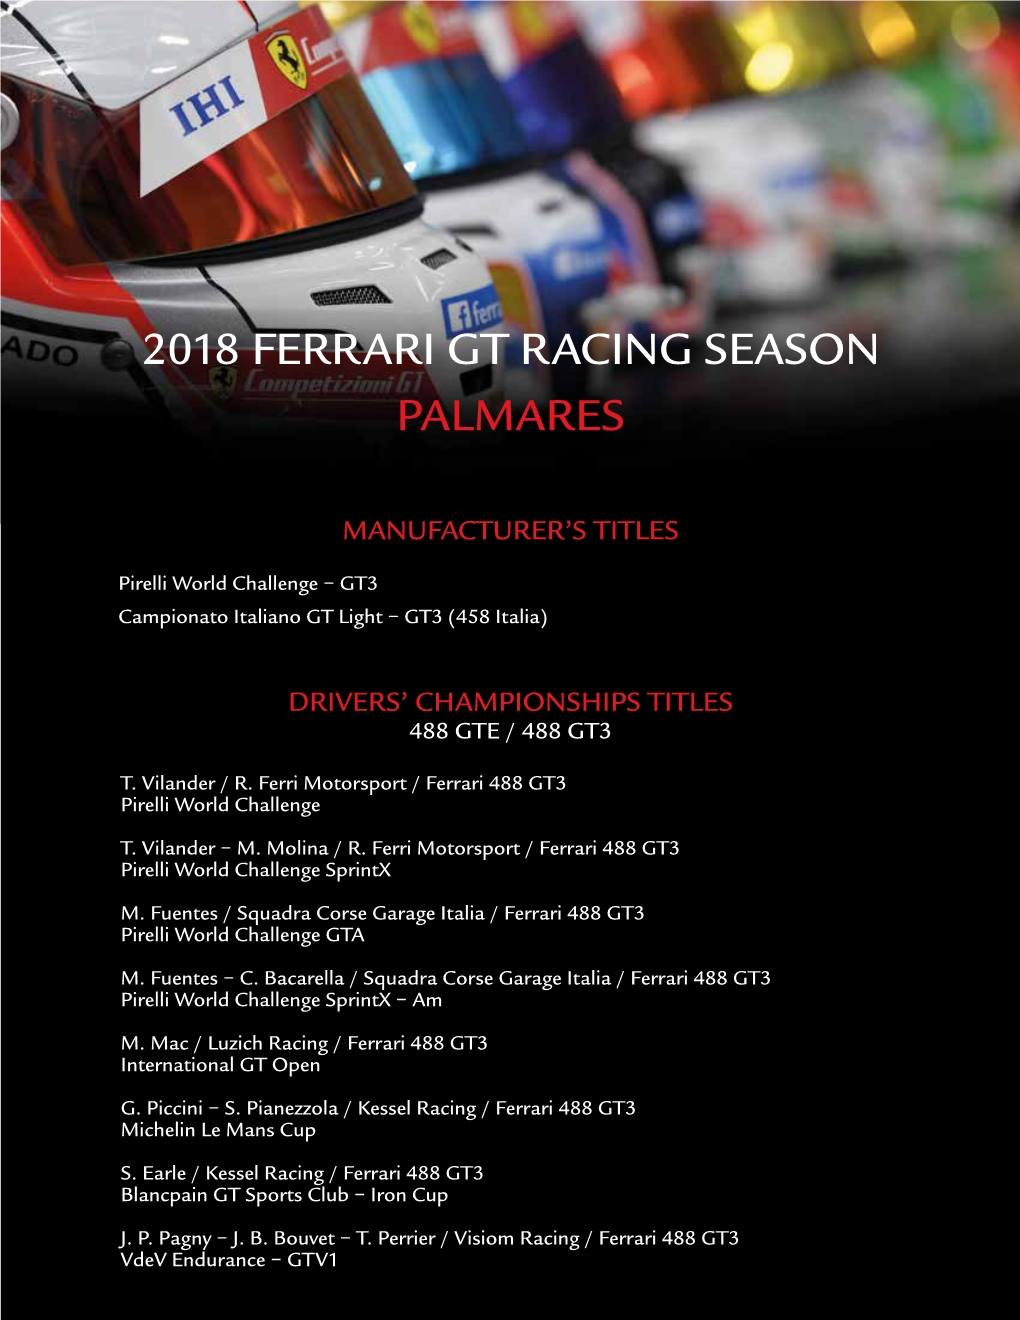 2018 Ferrari Gt Racing Season Palmares